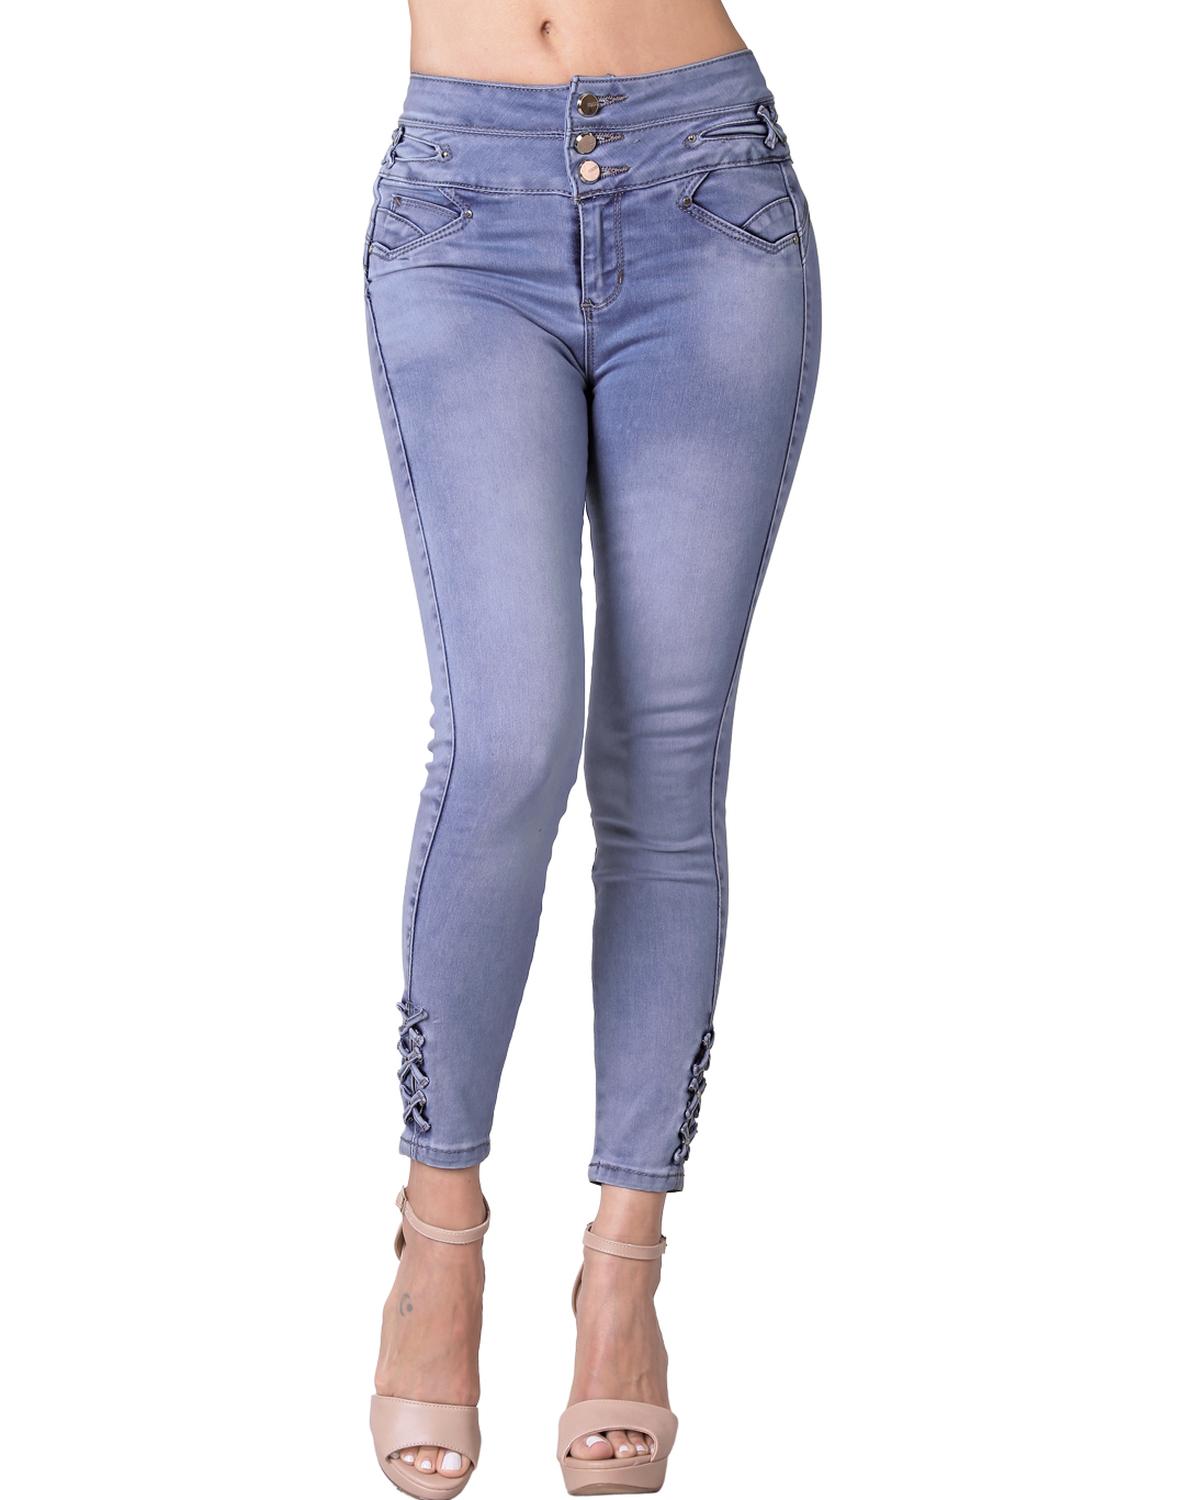 Jeans Moda Skinny Mujer Azul Fergino 52904607